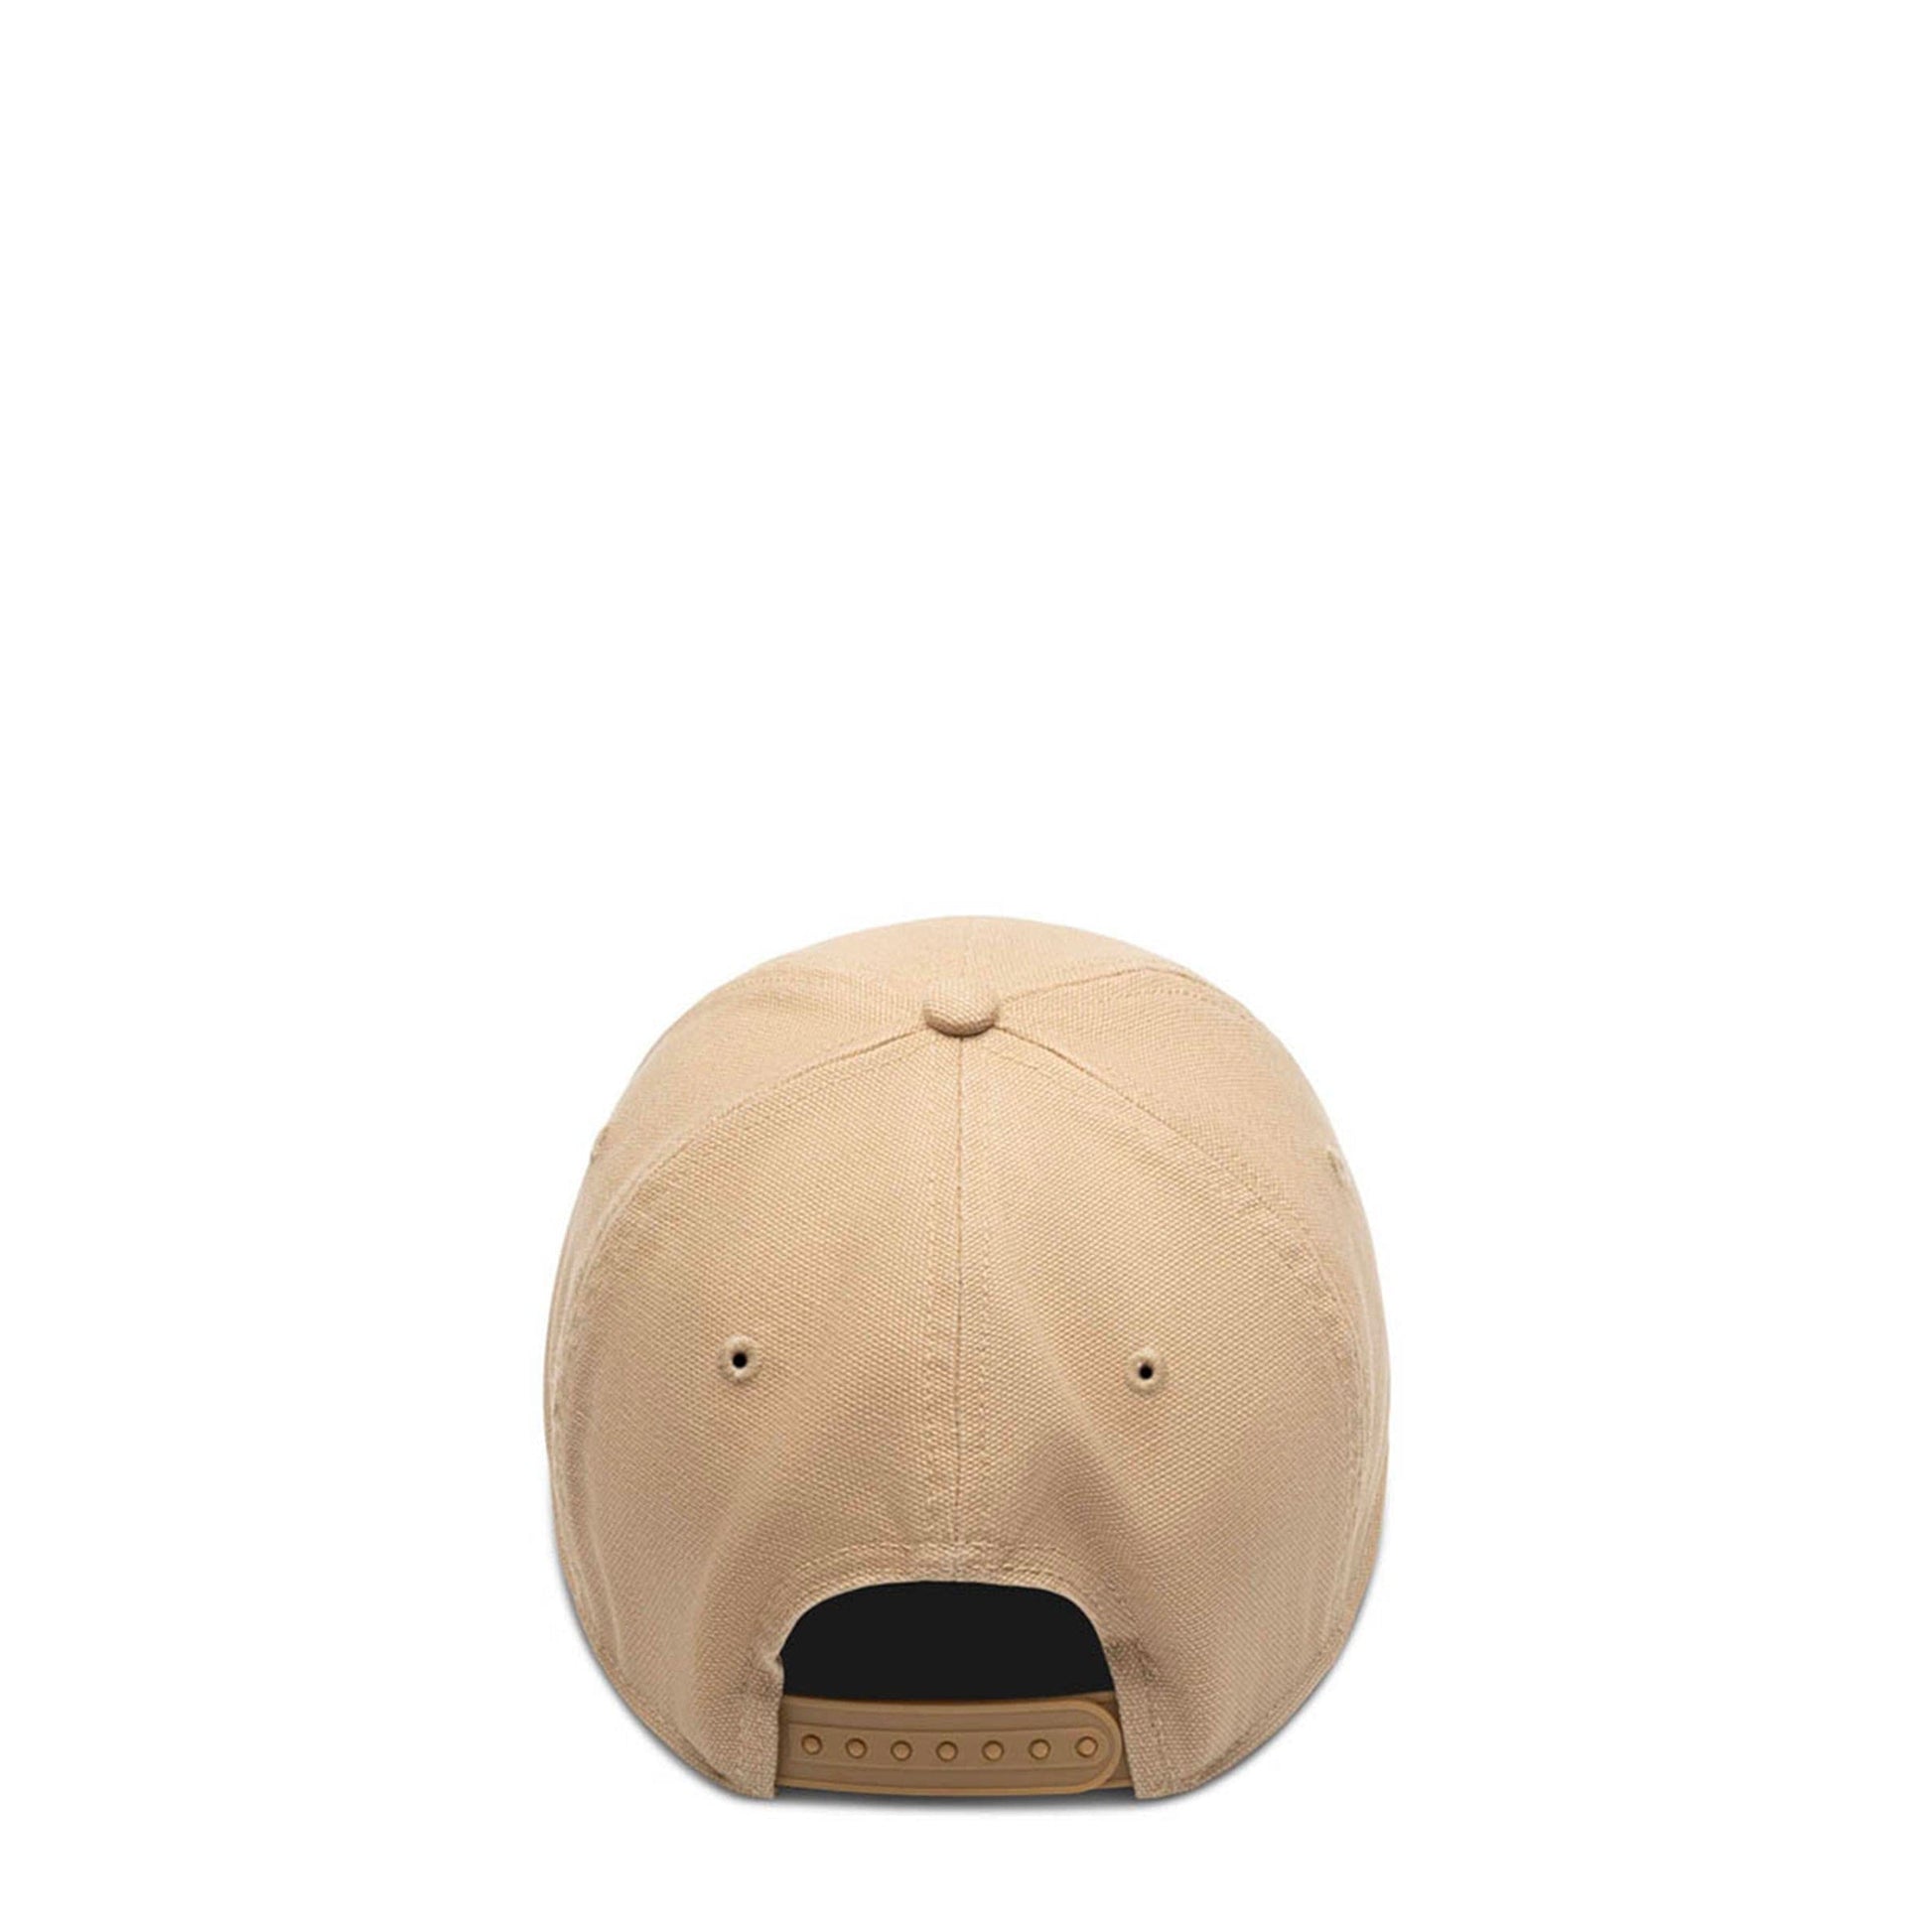 Carhartt WIP Headwear DUSTY HAMILTON BROWN / O/S DUNES CAP